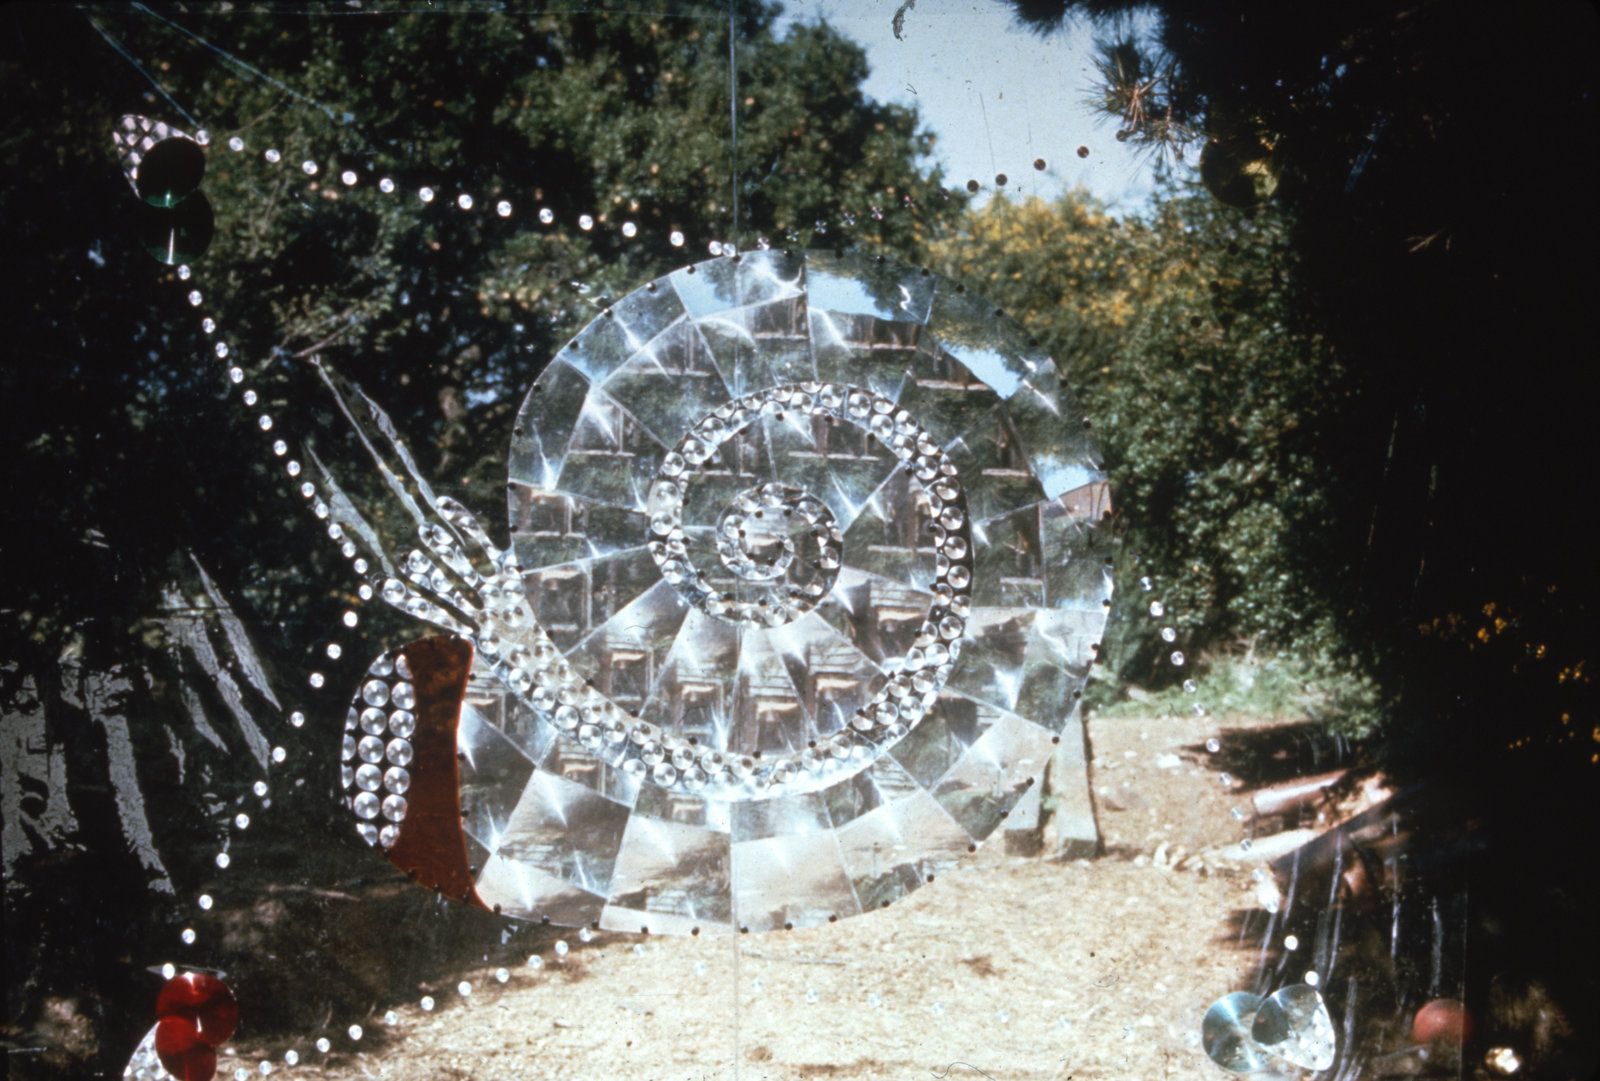 Jerry Pethick, Nautlilus, 1974, vinyl, fresnel lens, plastic rivets, diffraction grating, 107 x 48 in. (274 x 122 cm)